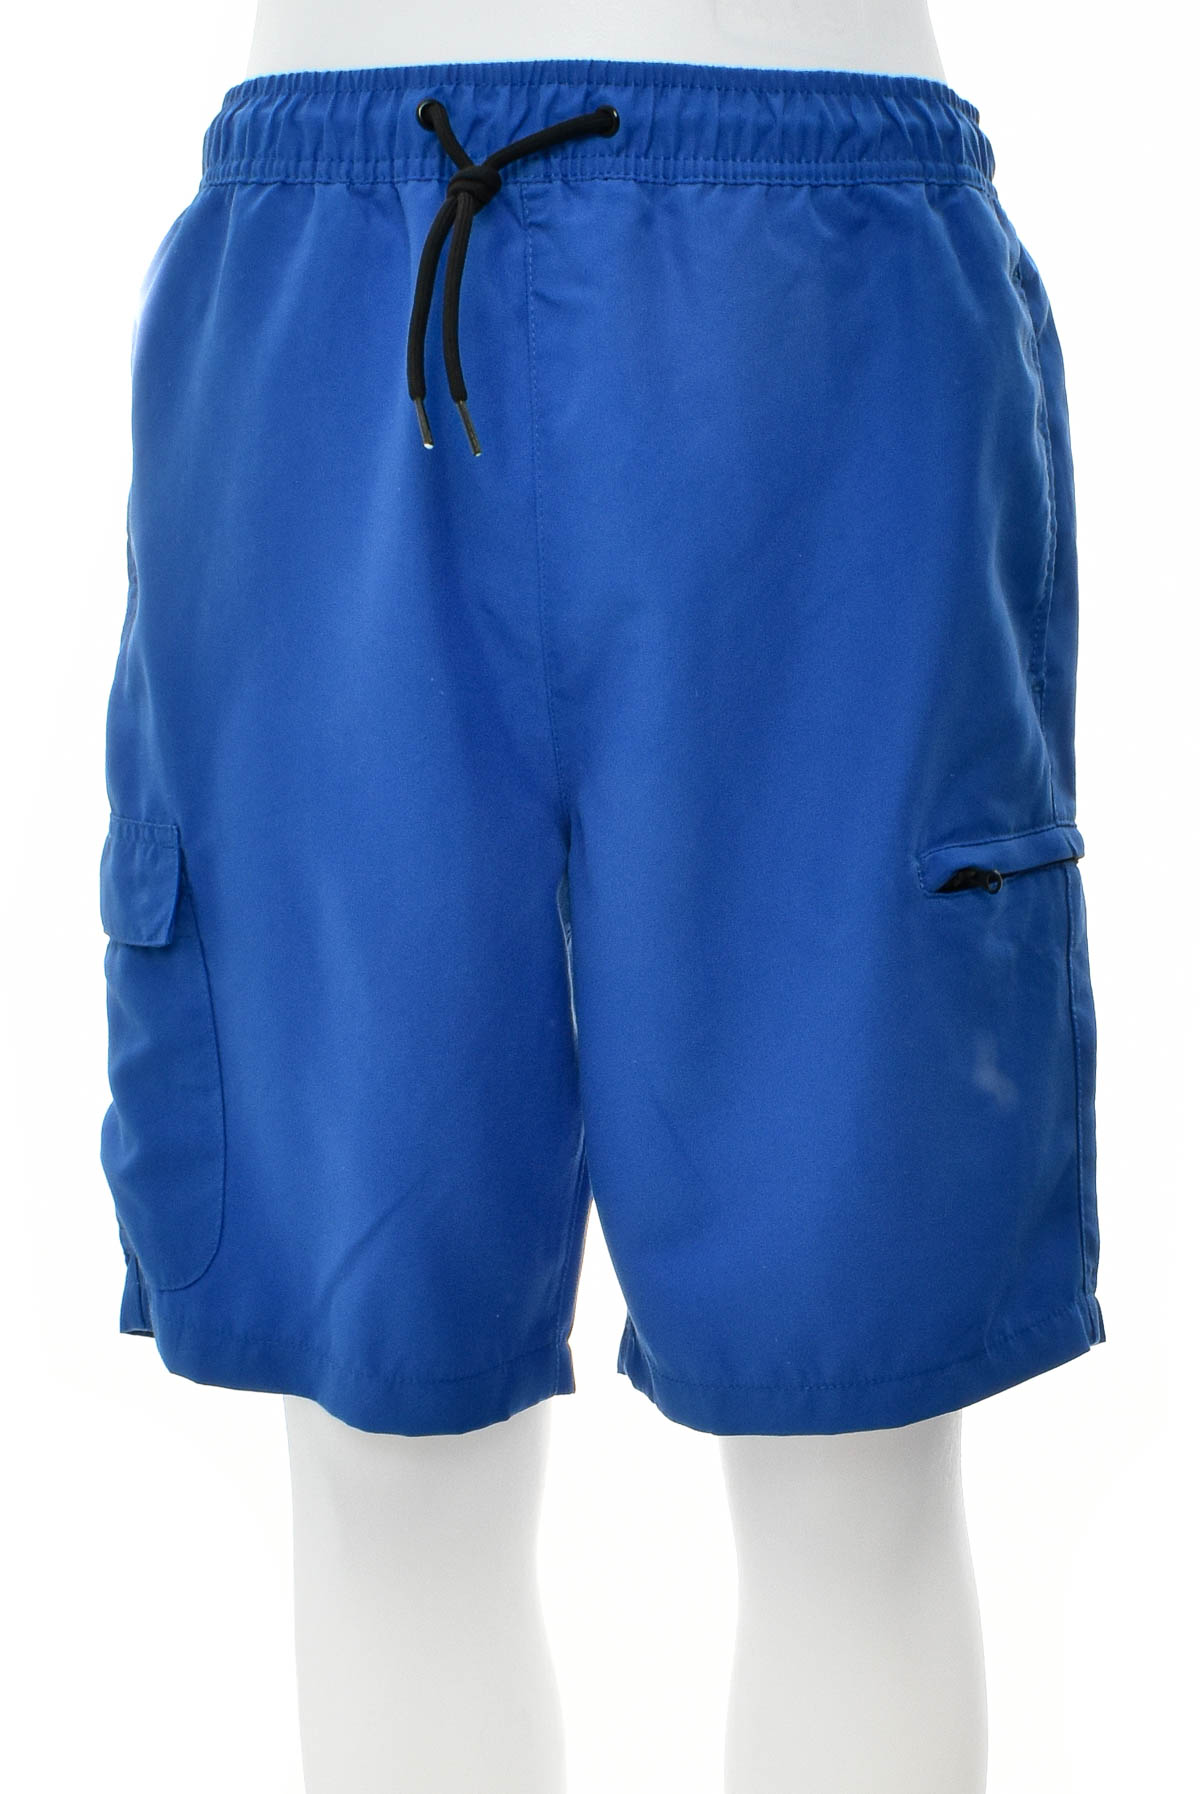 Men's shorts - PRIMARK - 0